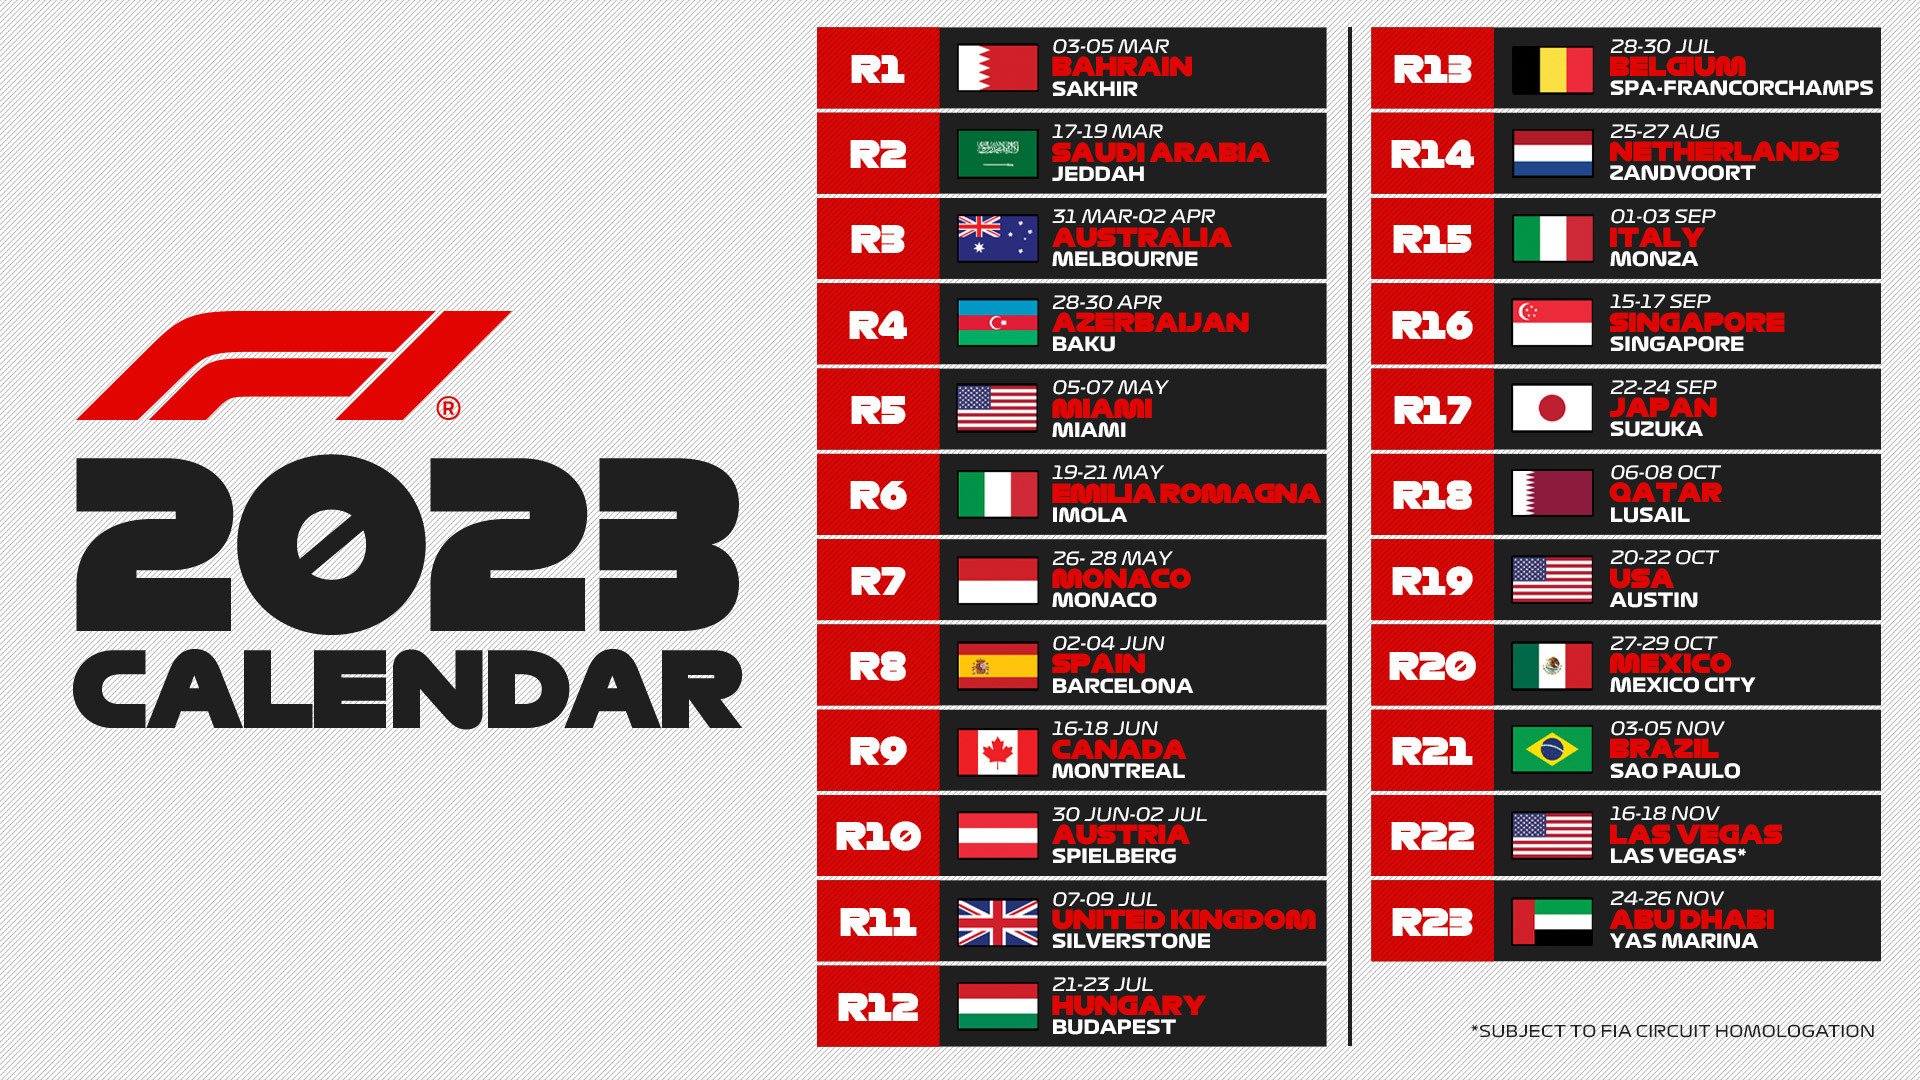 f1-calendar-full-formula-one-schedule-for-2021-including-all-23-grand-prix-race-dates-f1